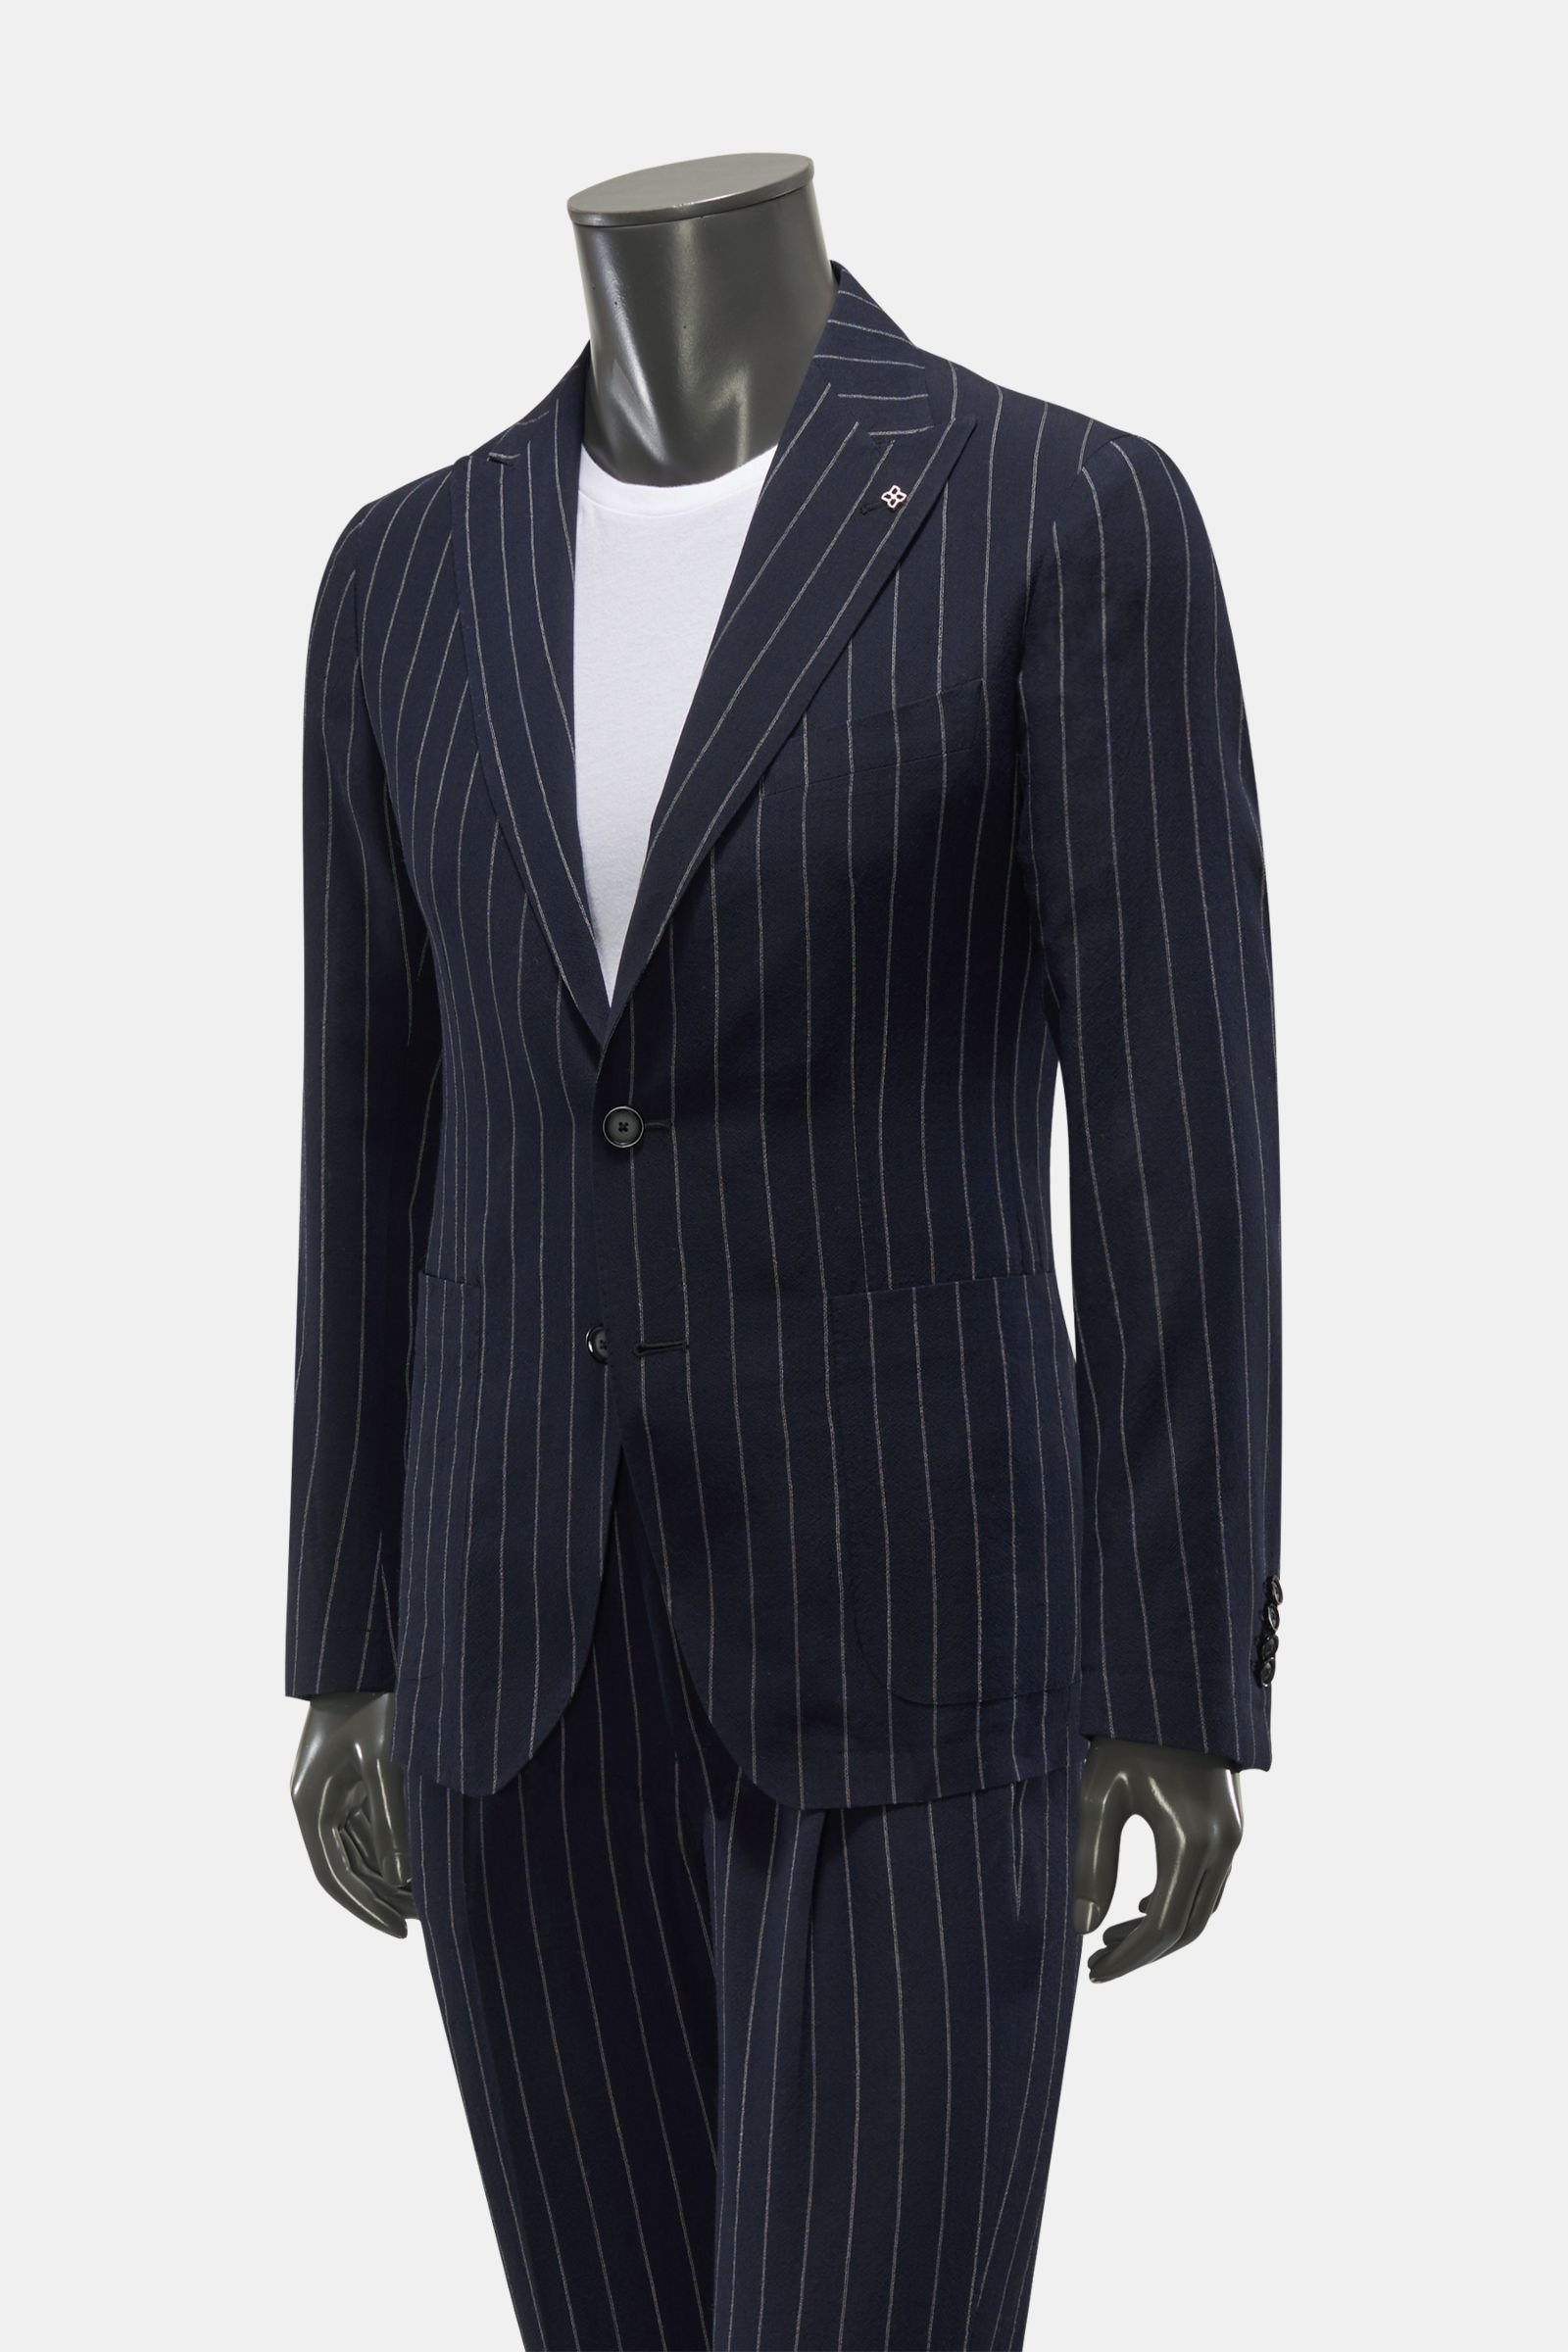 Suit 'Derrick' navy/off-white striped